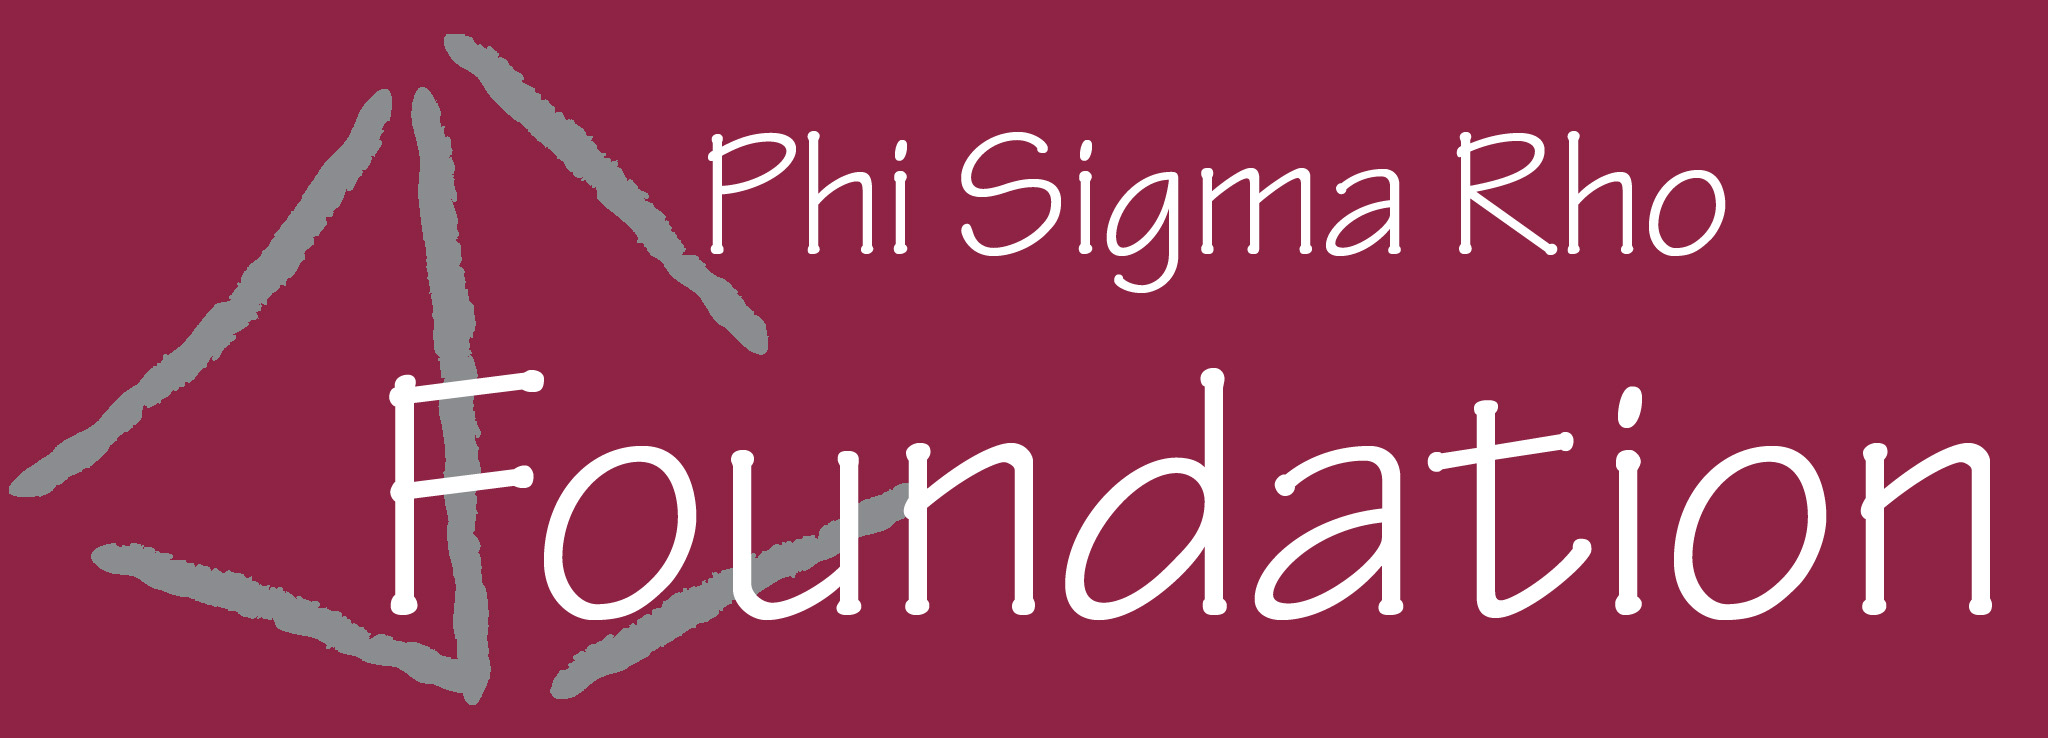 Phi Sigma Rho Foundation